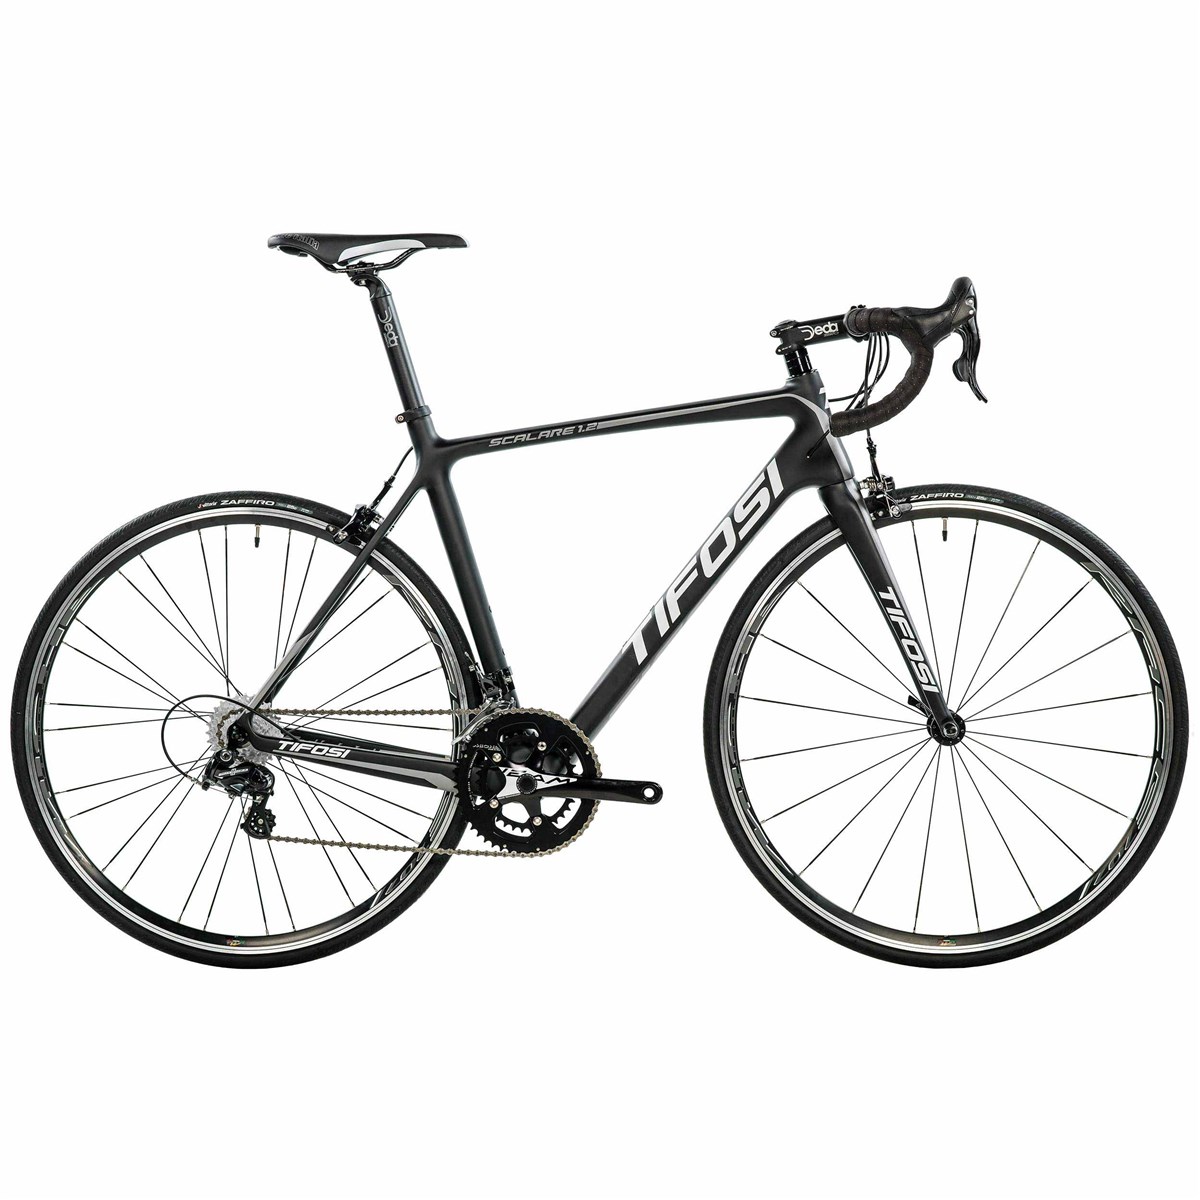 Tifosi Scalare 1.2 Carbon Athena 2016 - Road Bike product image